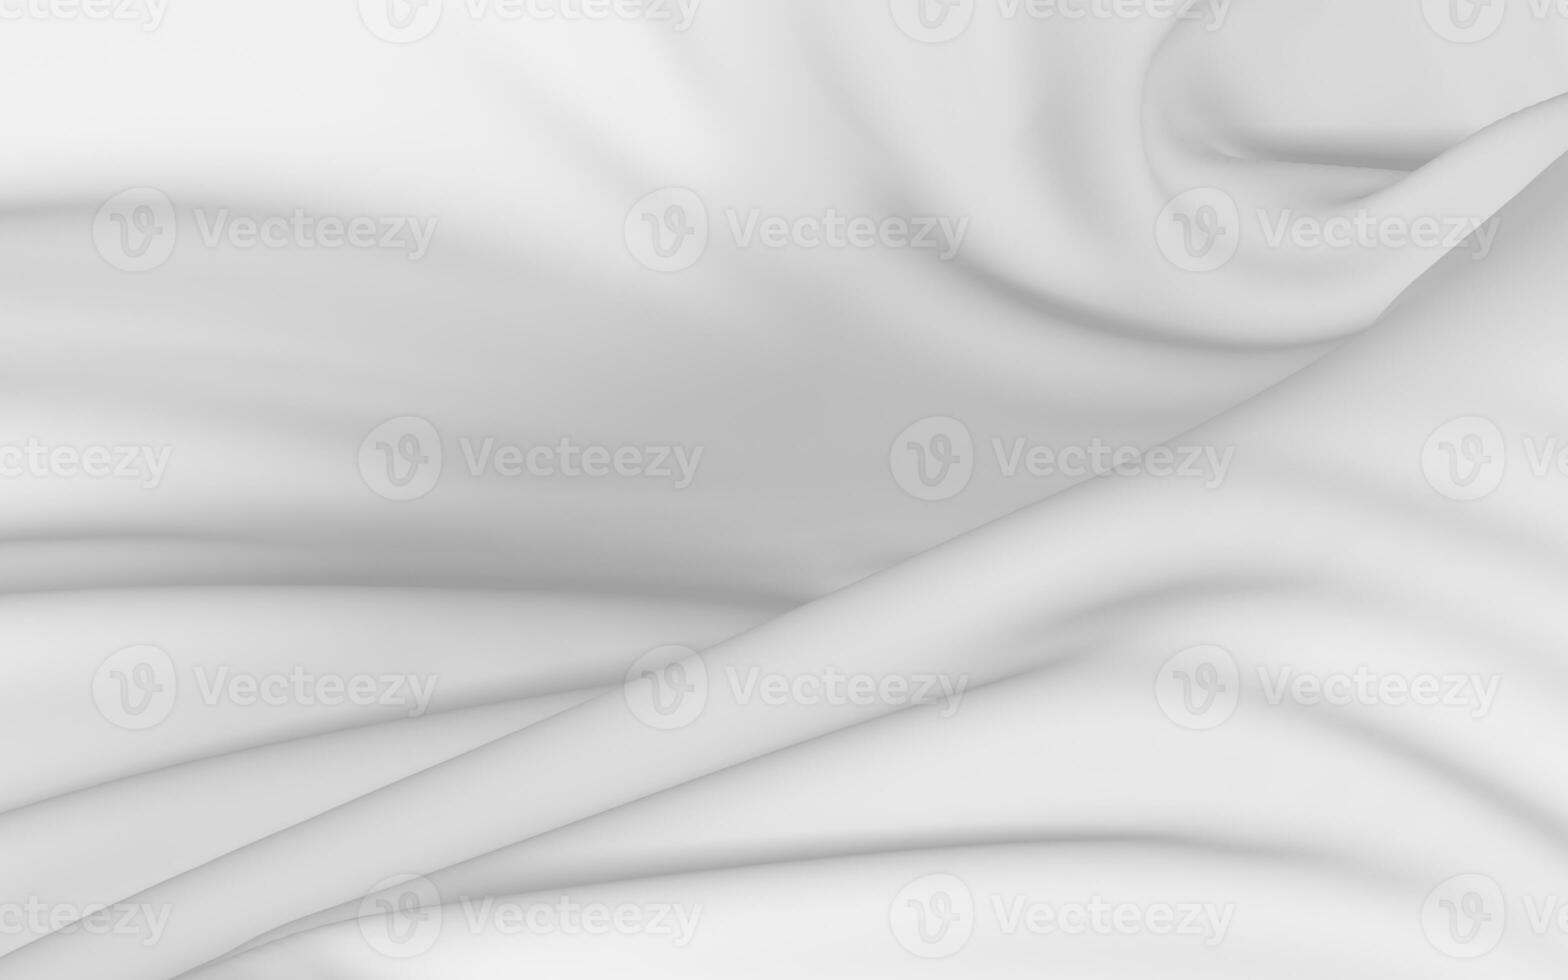 vloeiende kleren met wit achtergrond, 3d weergave. foto